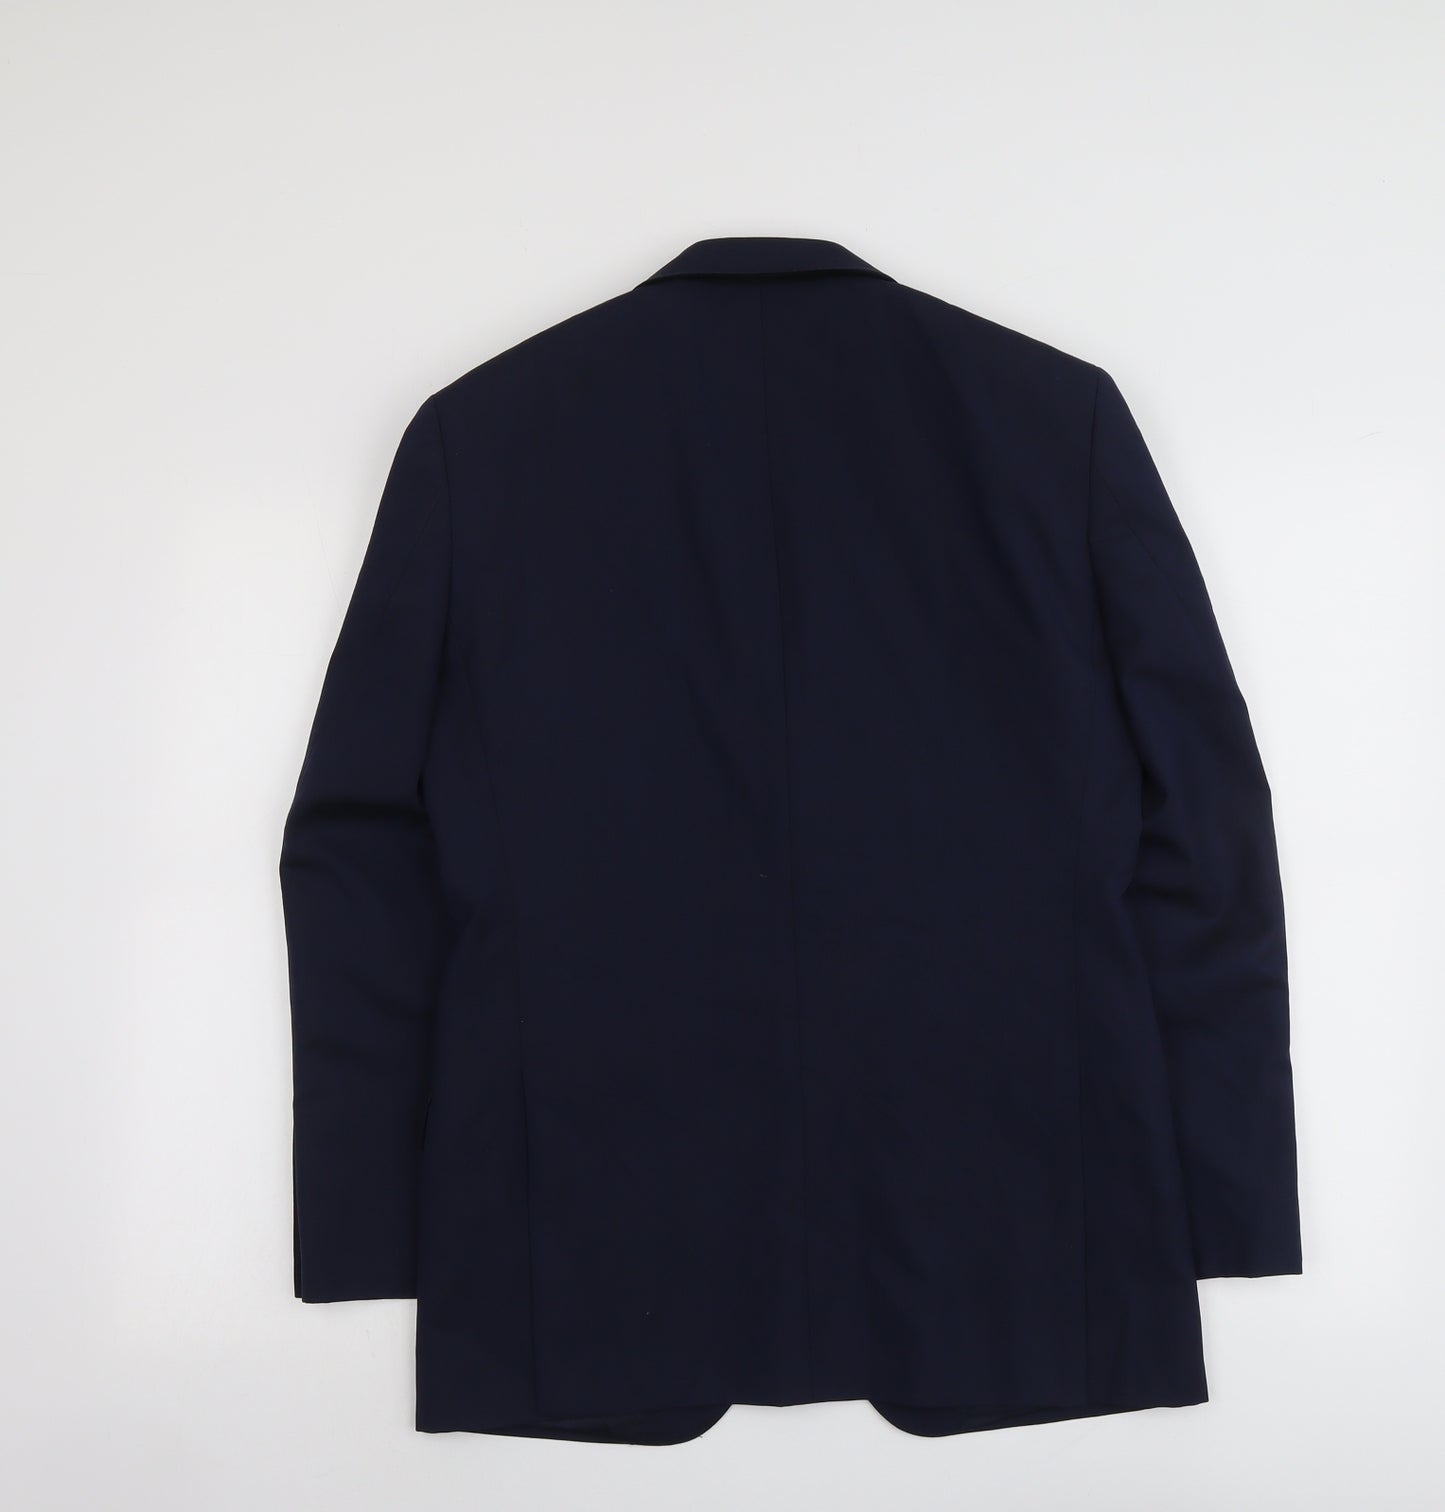 TM Lewin Mens Blue Wool Jacket Suit Jacket Size 40 Regular